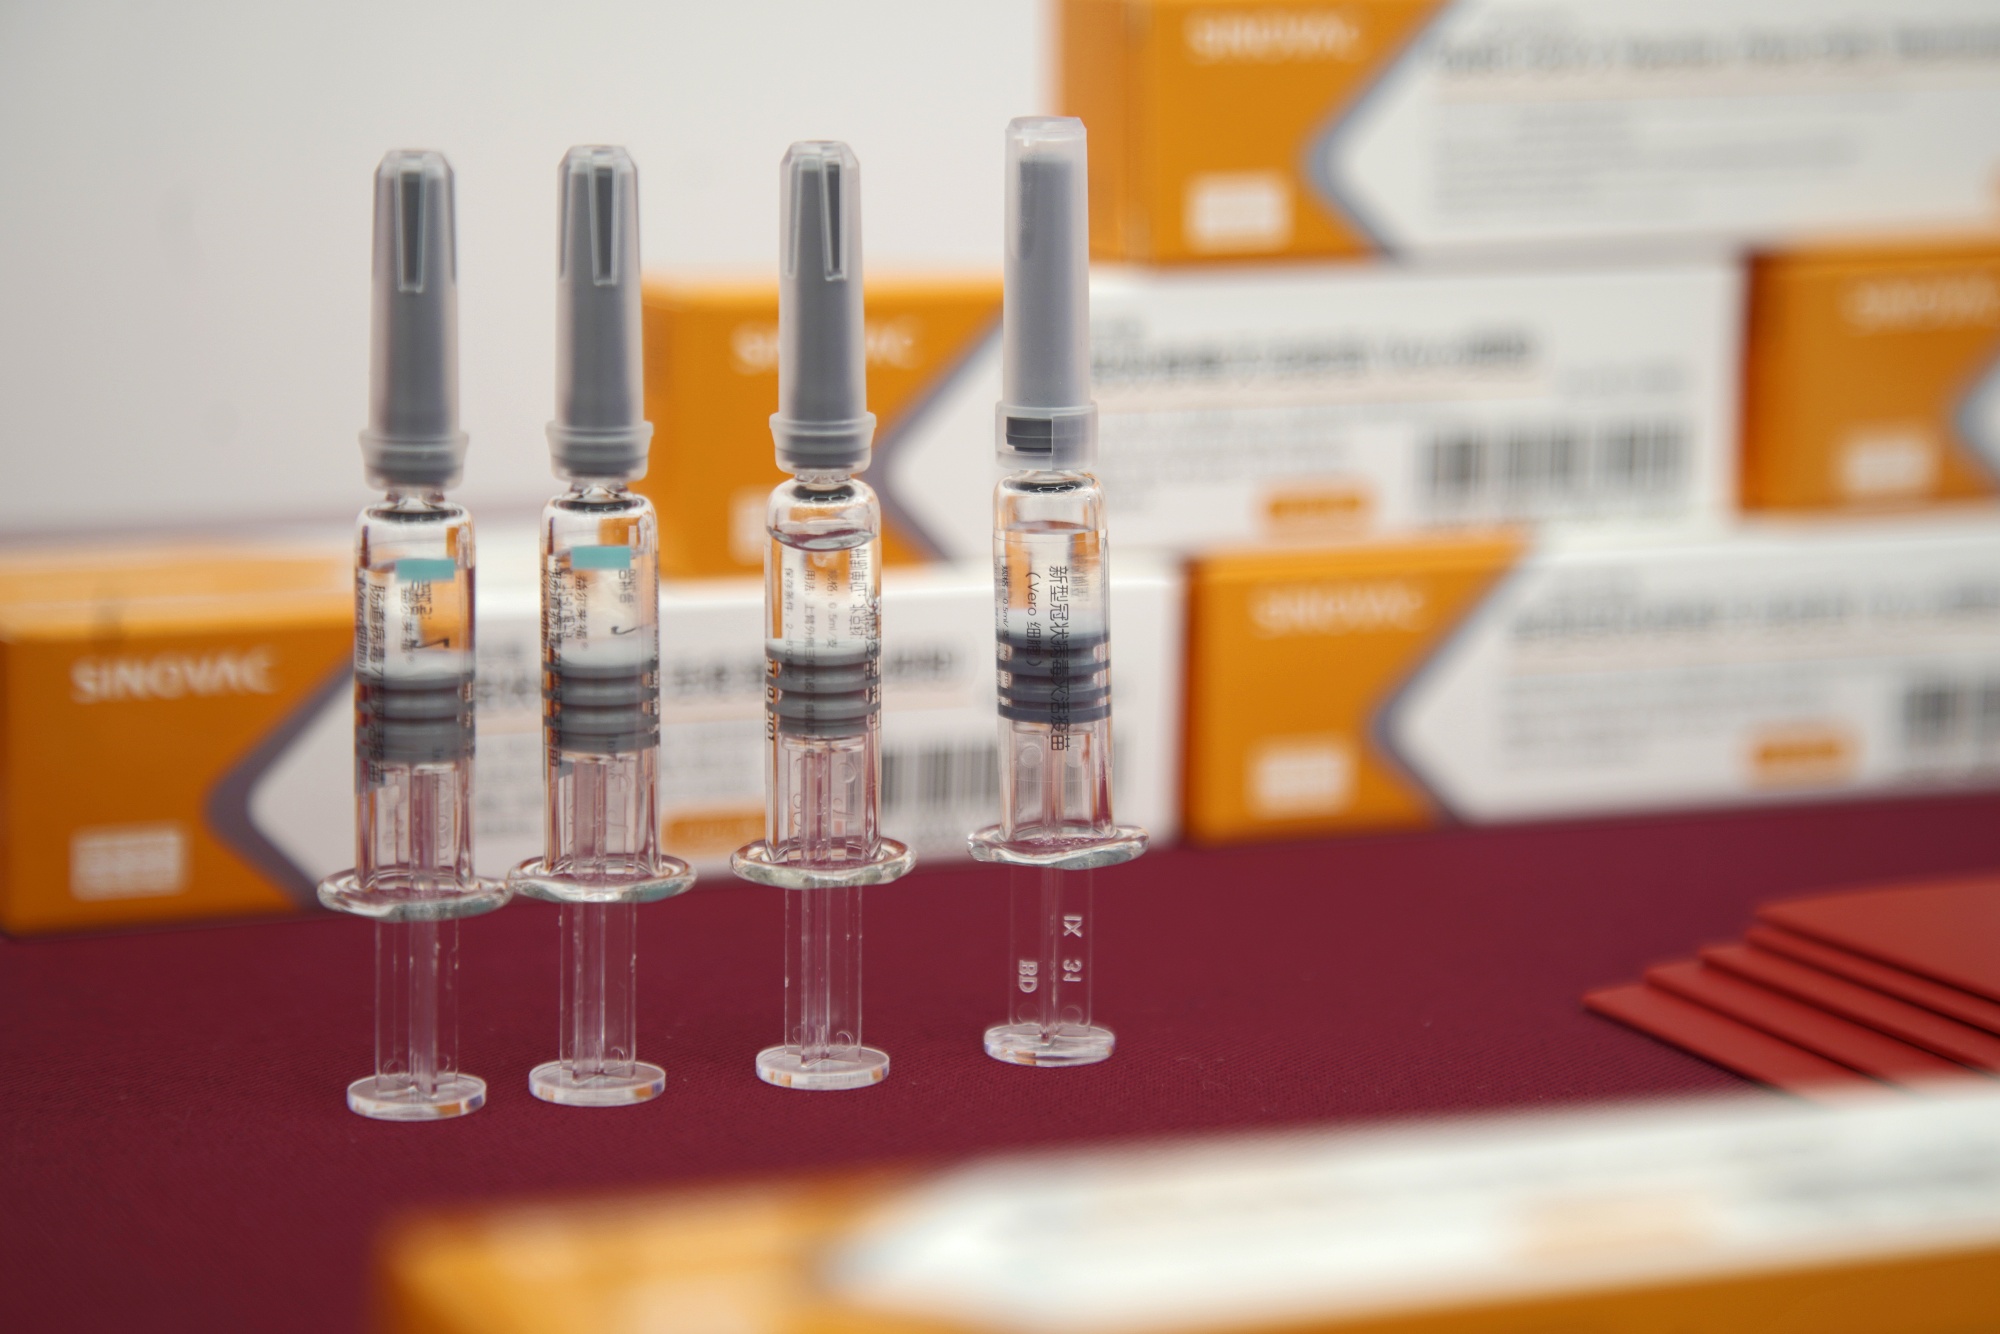 Vials of Sinovac Biotech Ltd.'s CoronaVac SARS-CoV-2 vaccine.